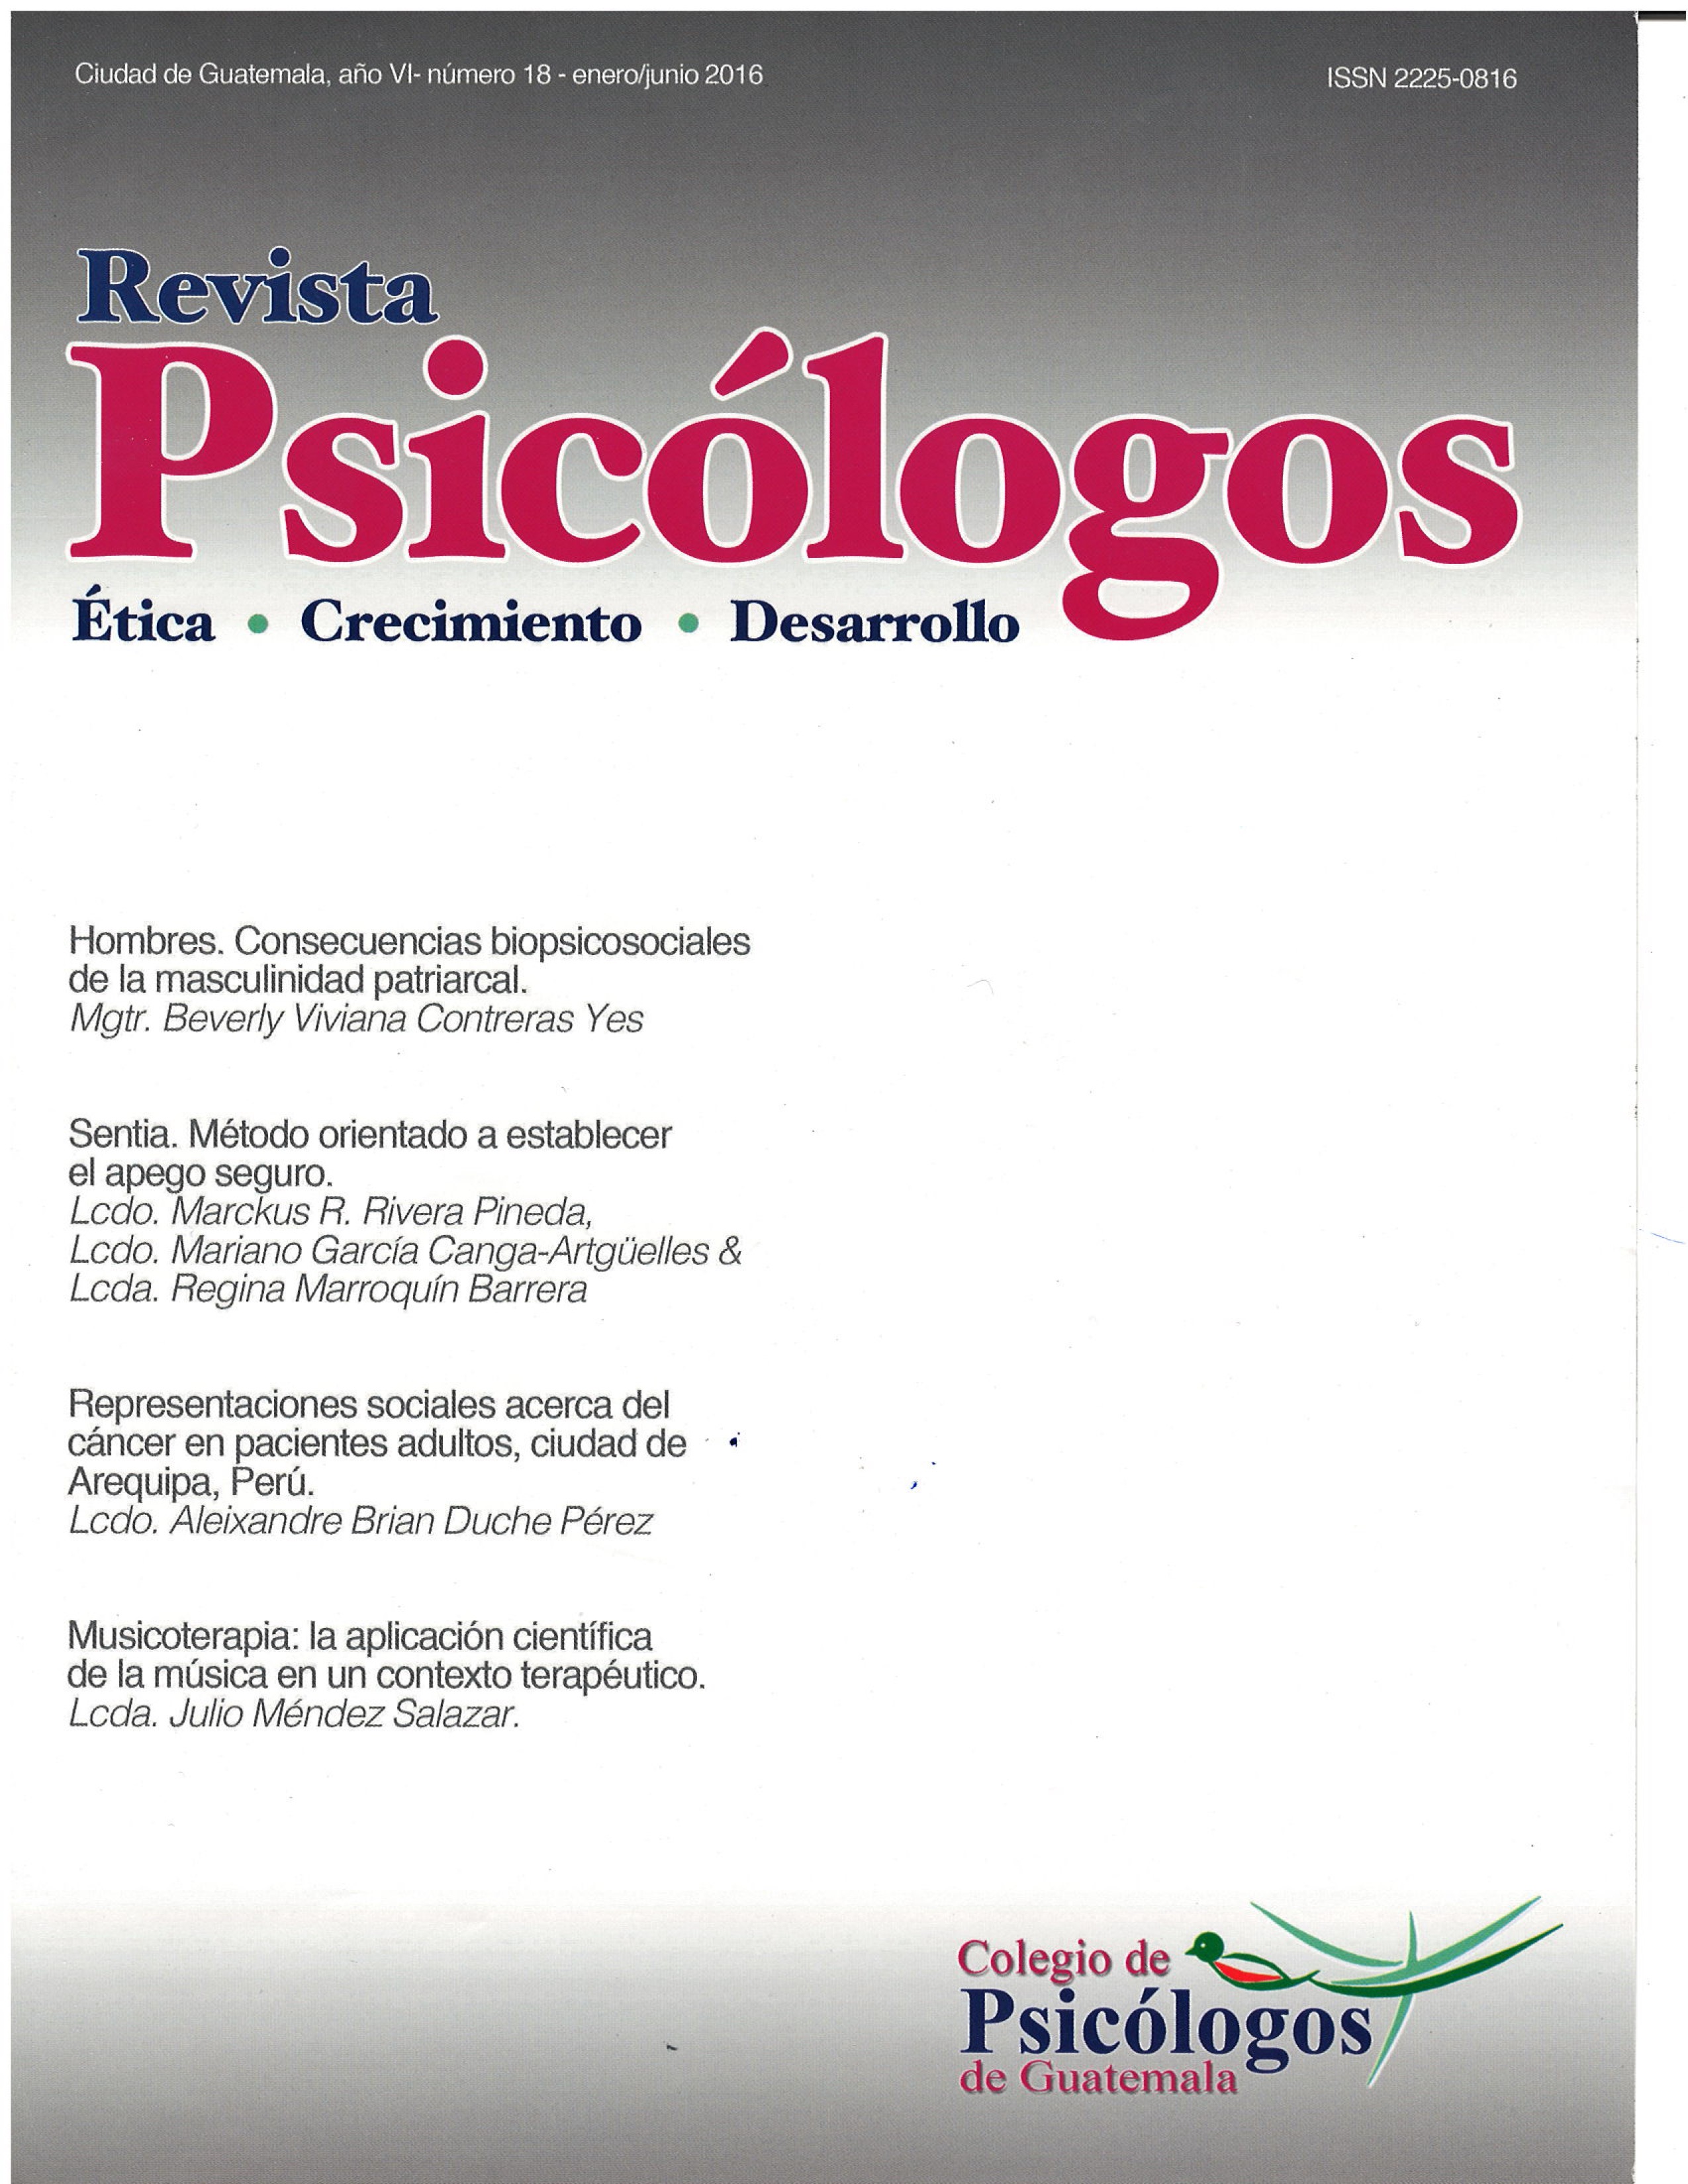 					Ver Vol. 6 Núm. 18 (2016): Revista Psicólogos No. 18
				